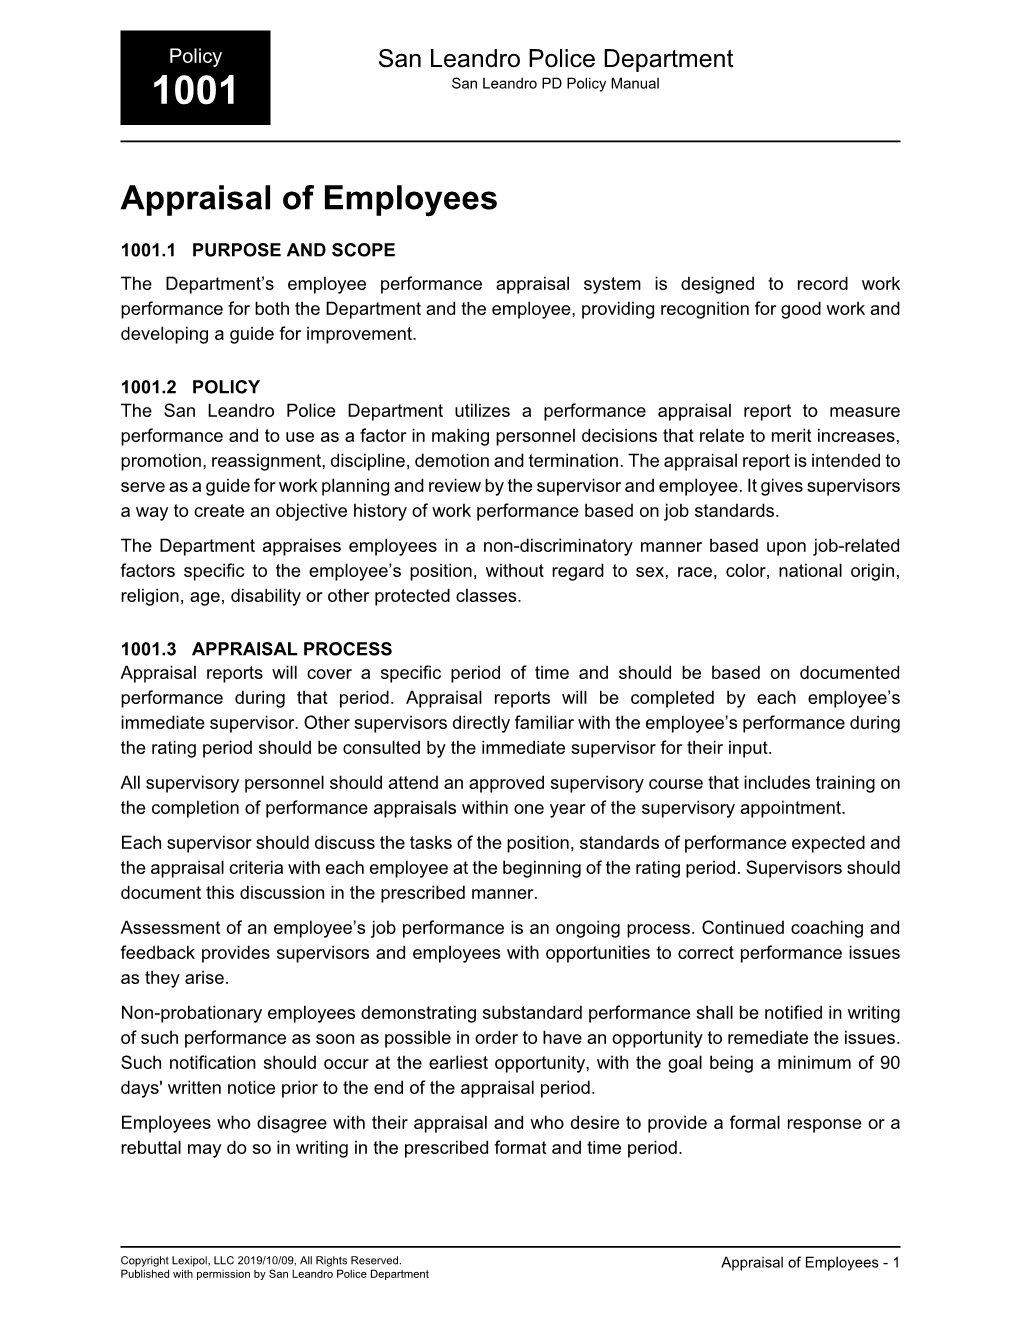 Appraisal of Employees